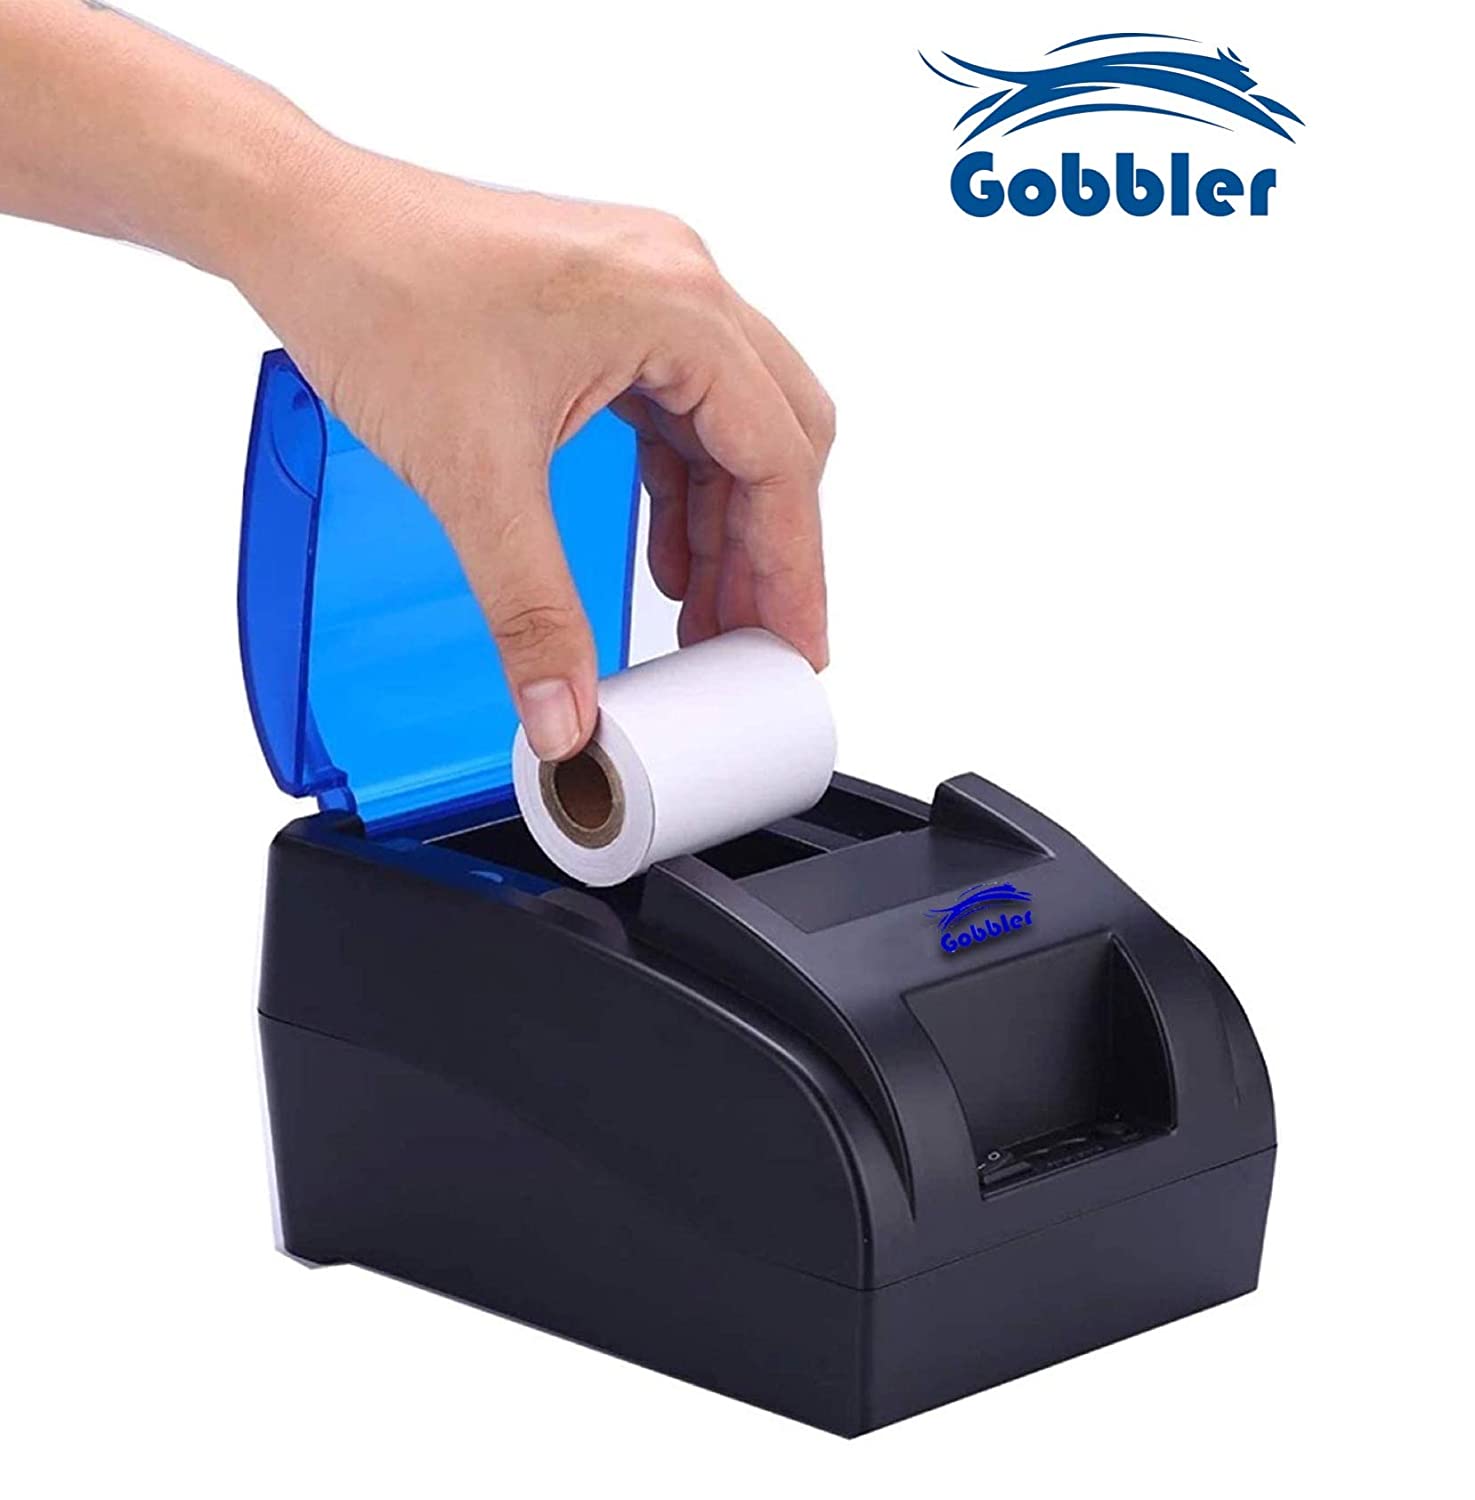 Gobbler Gb iiz mm Usb+bluetooth Thermal Receipt Printer